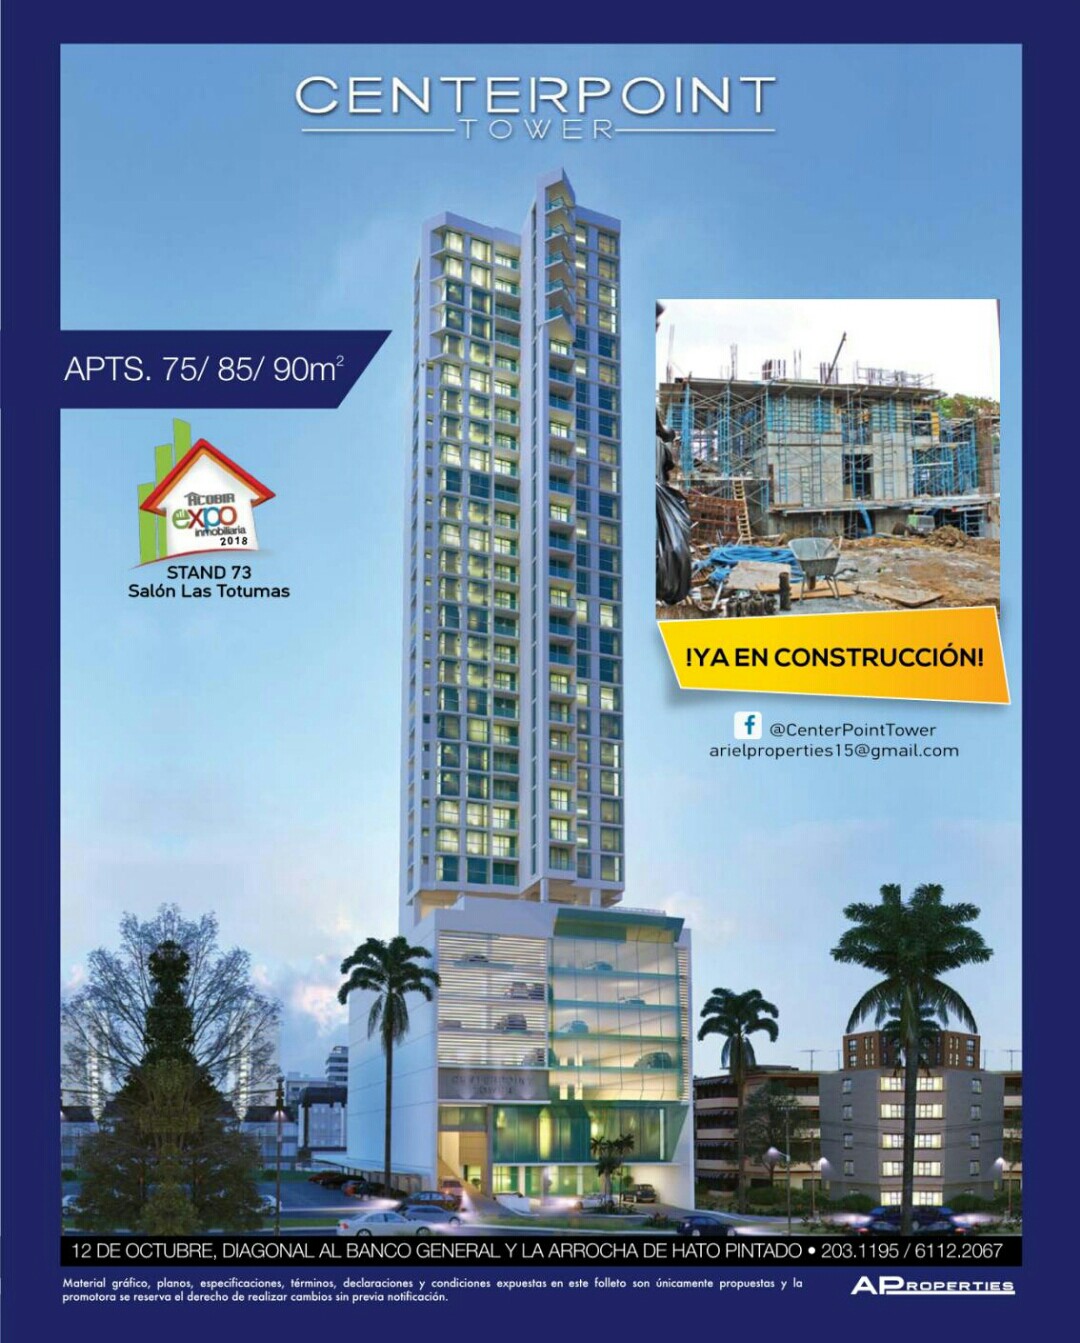 Catalogo expo inmobiliaria Arcobir 2018 p27